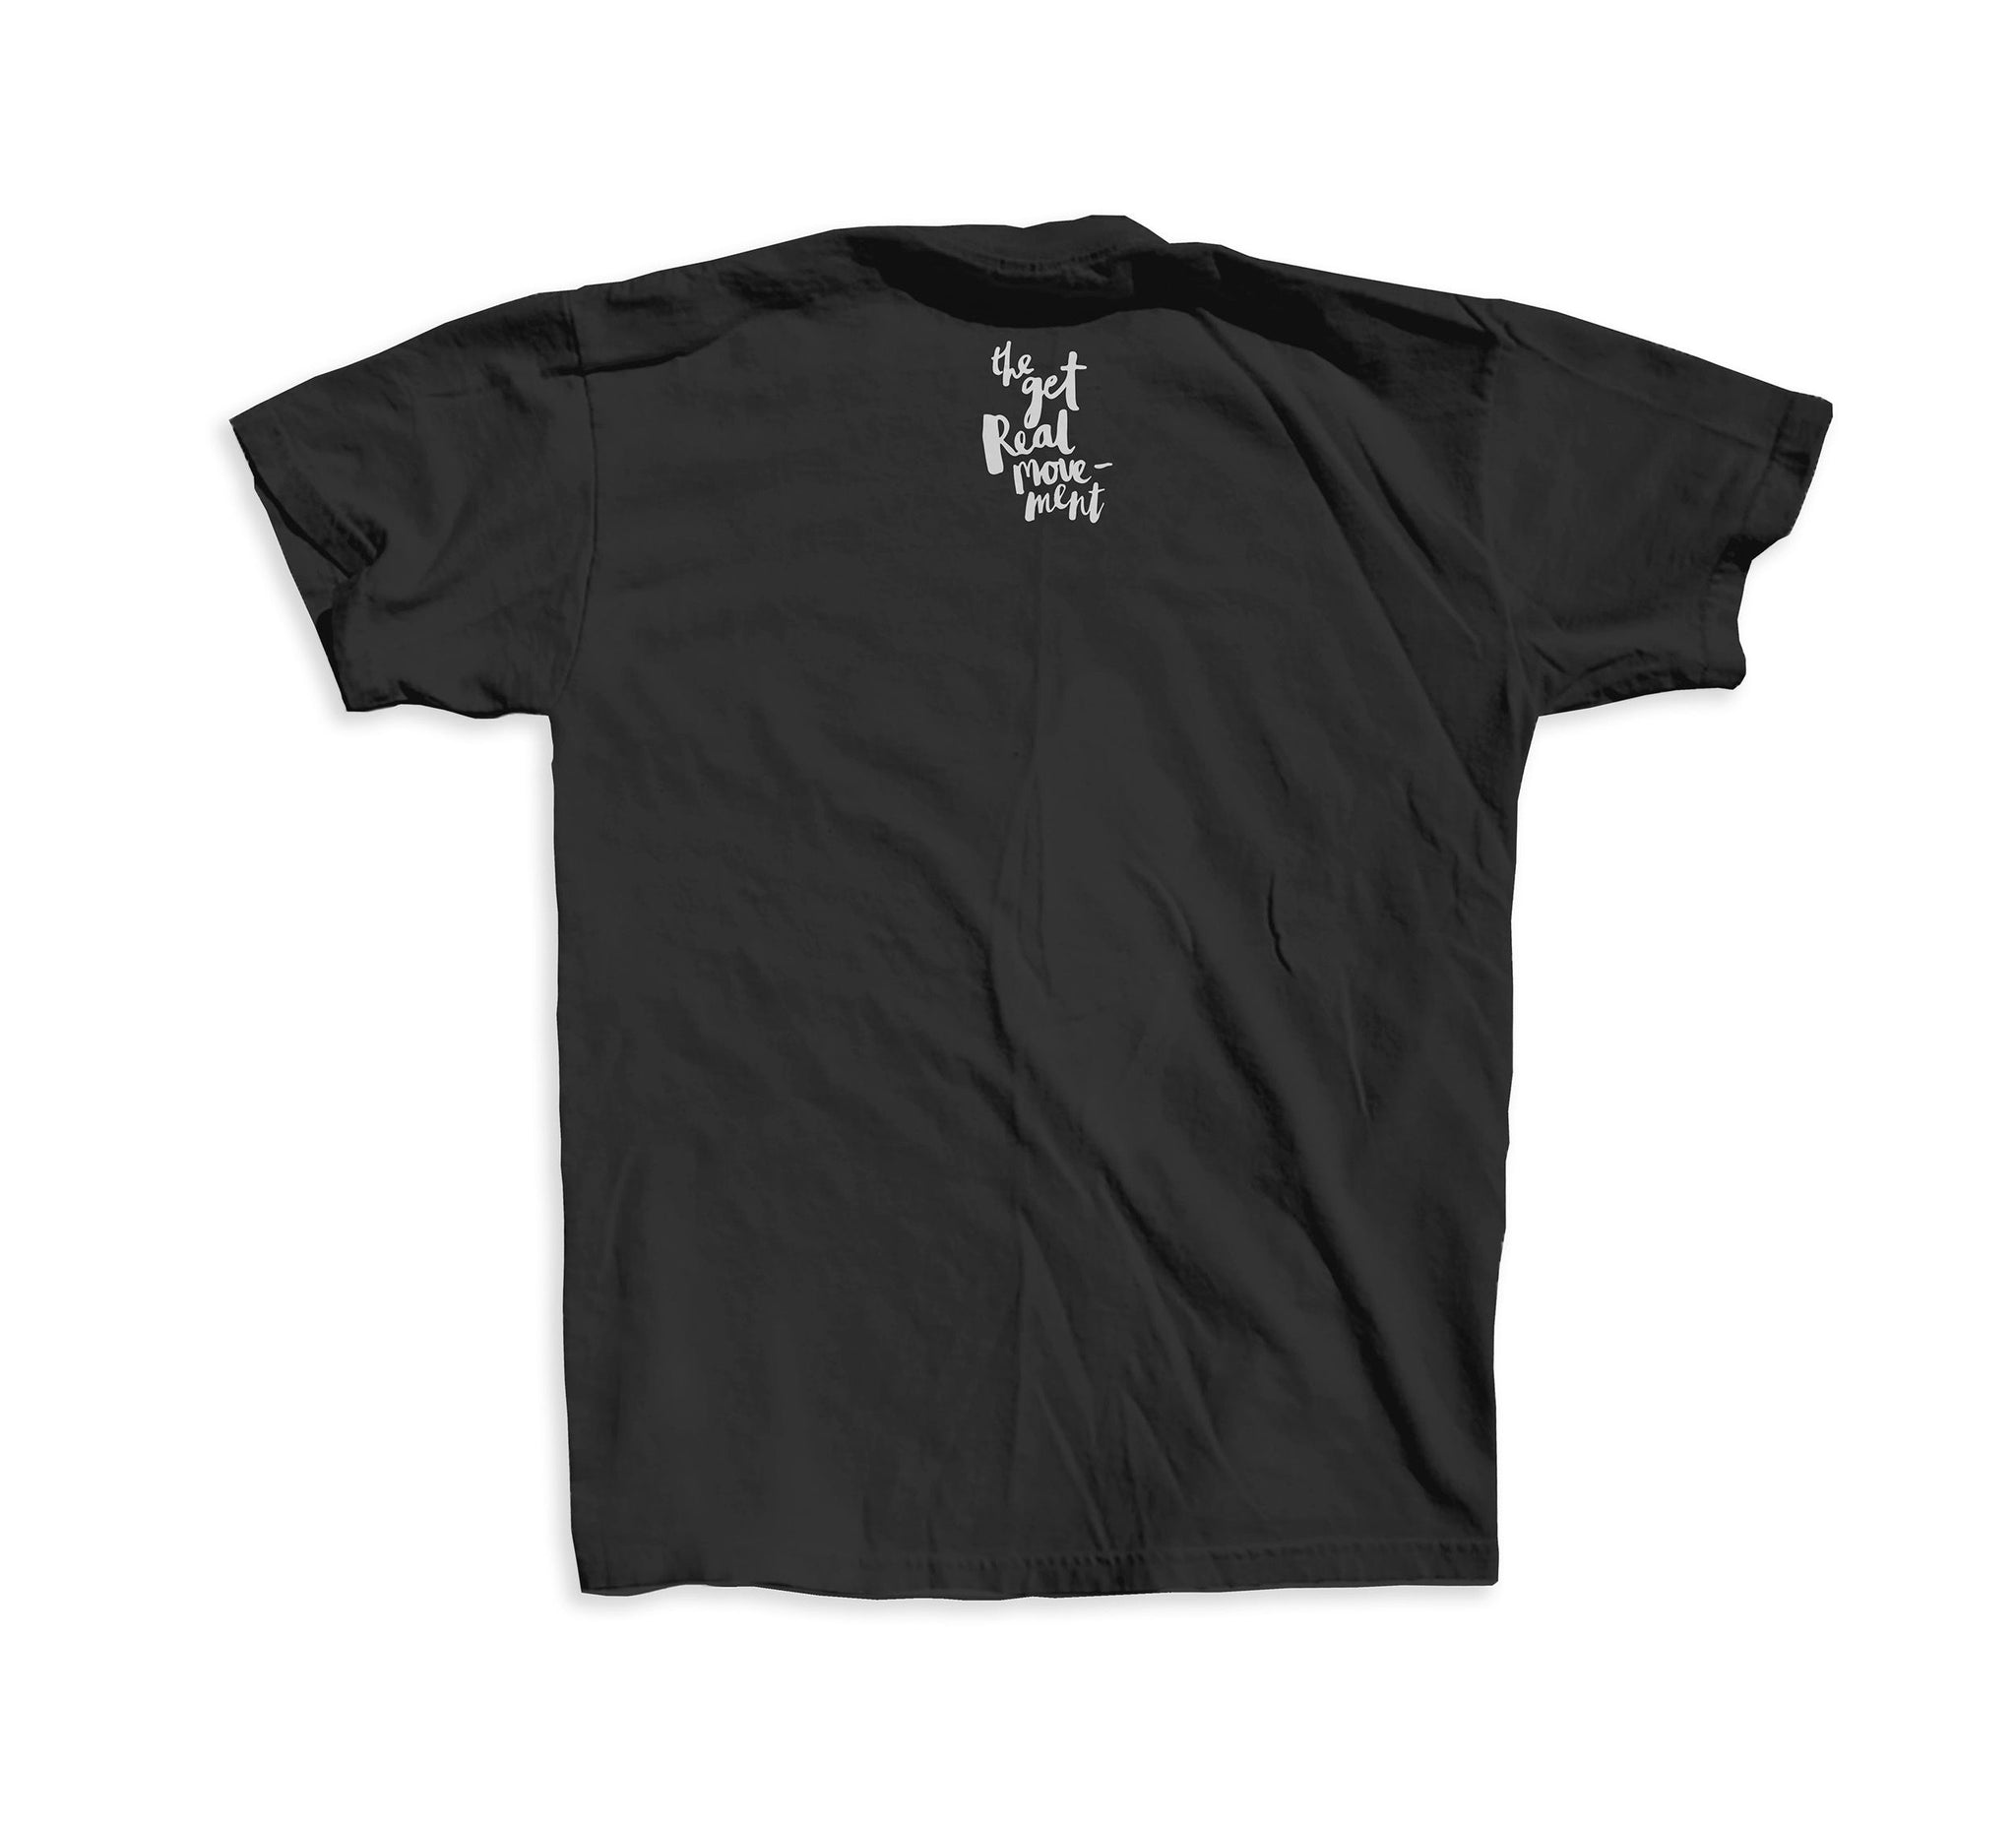 Free To Love - Black T-Shirt